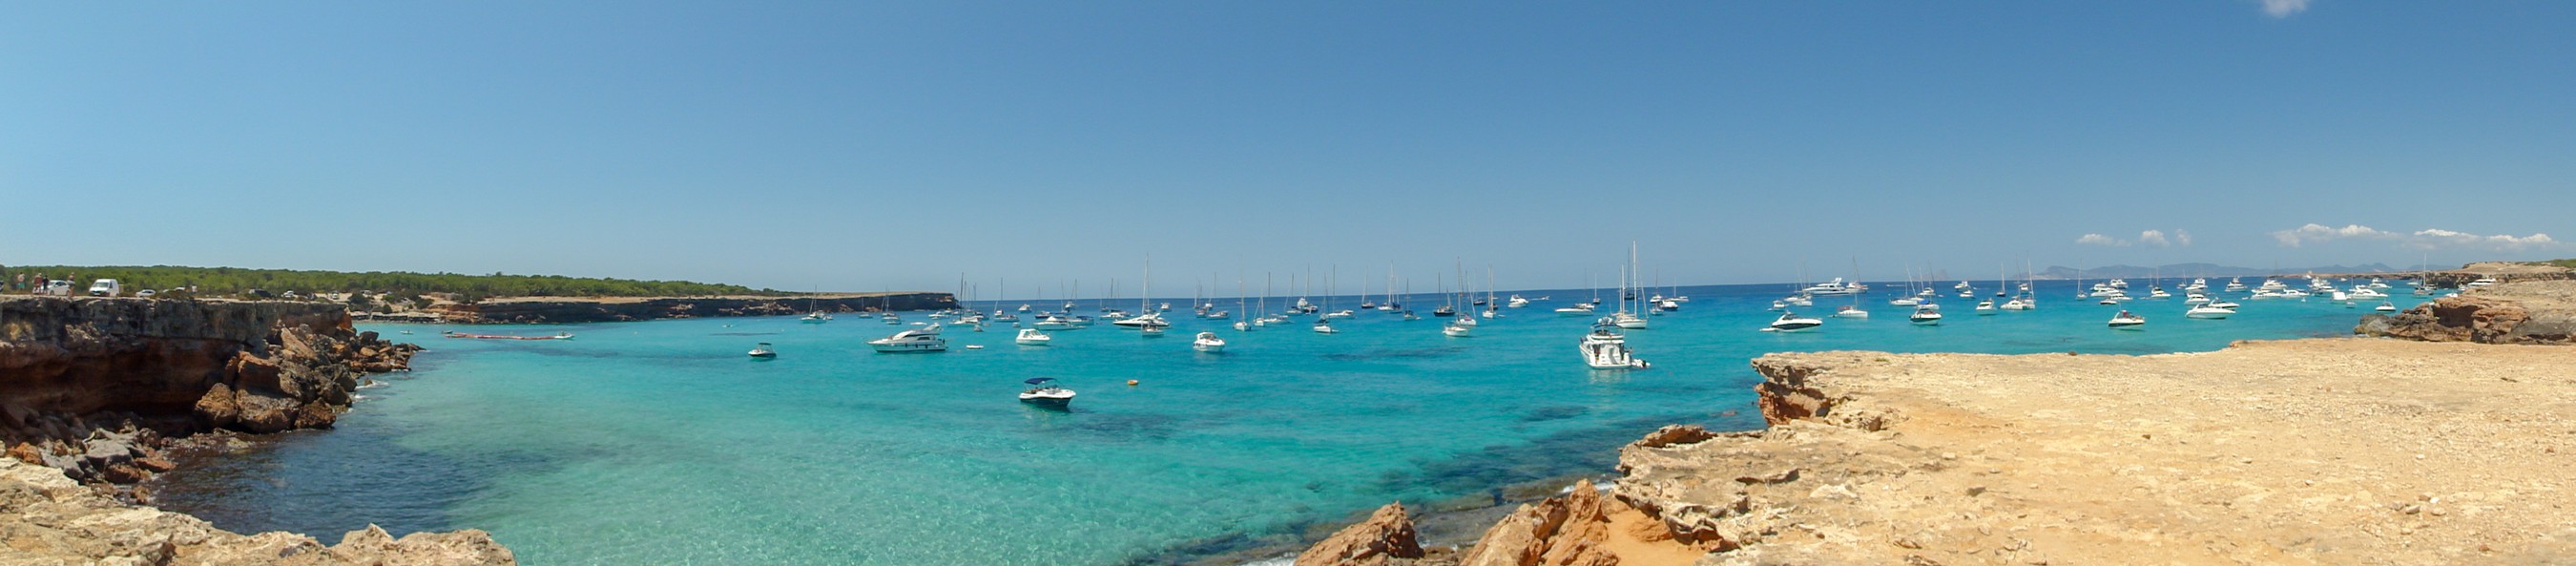 Formentera, Spain